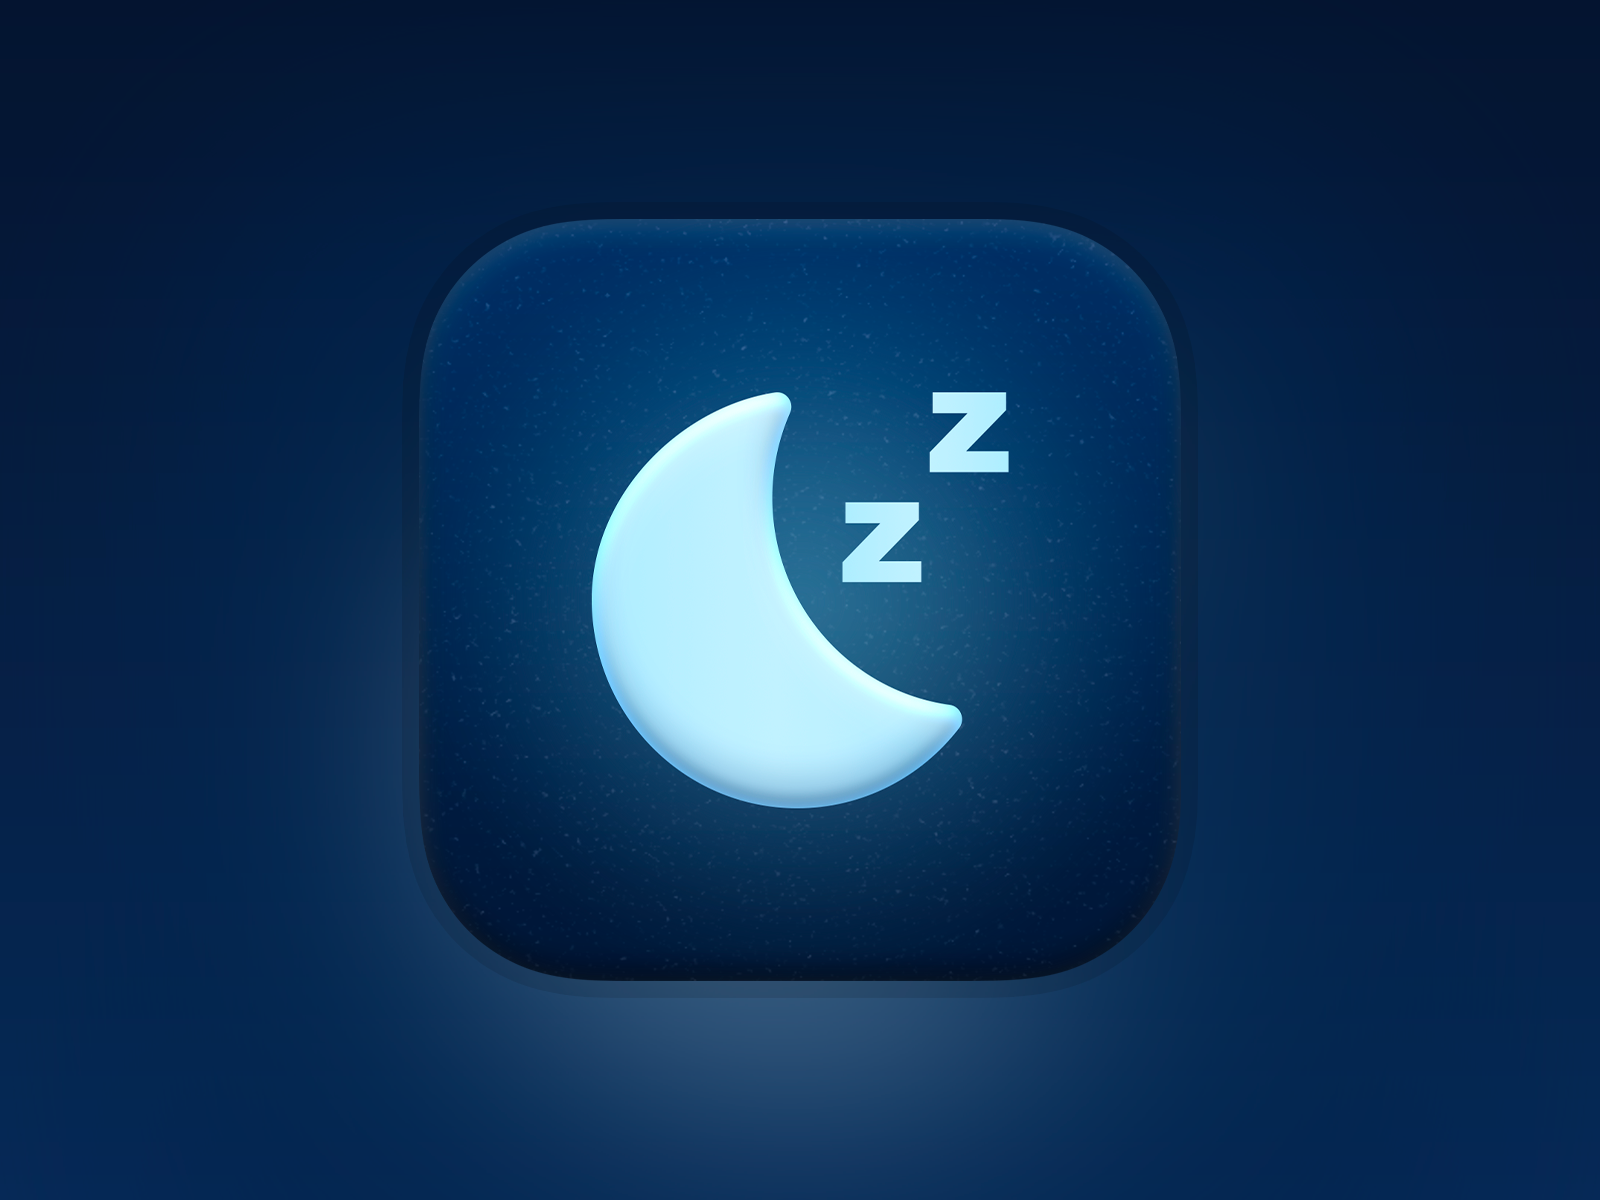 App icons design idea #30: Sleep & relaxation app icon